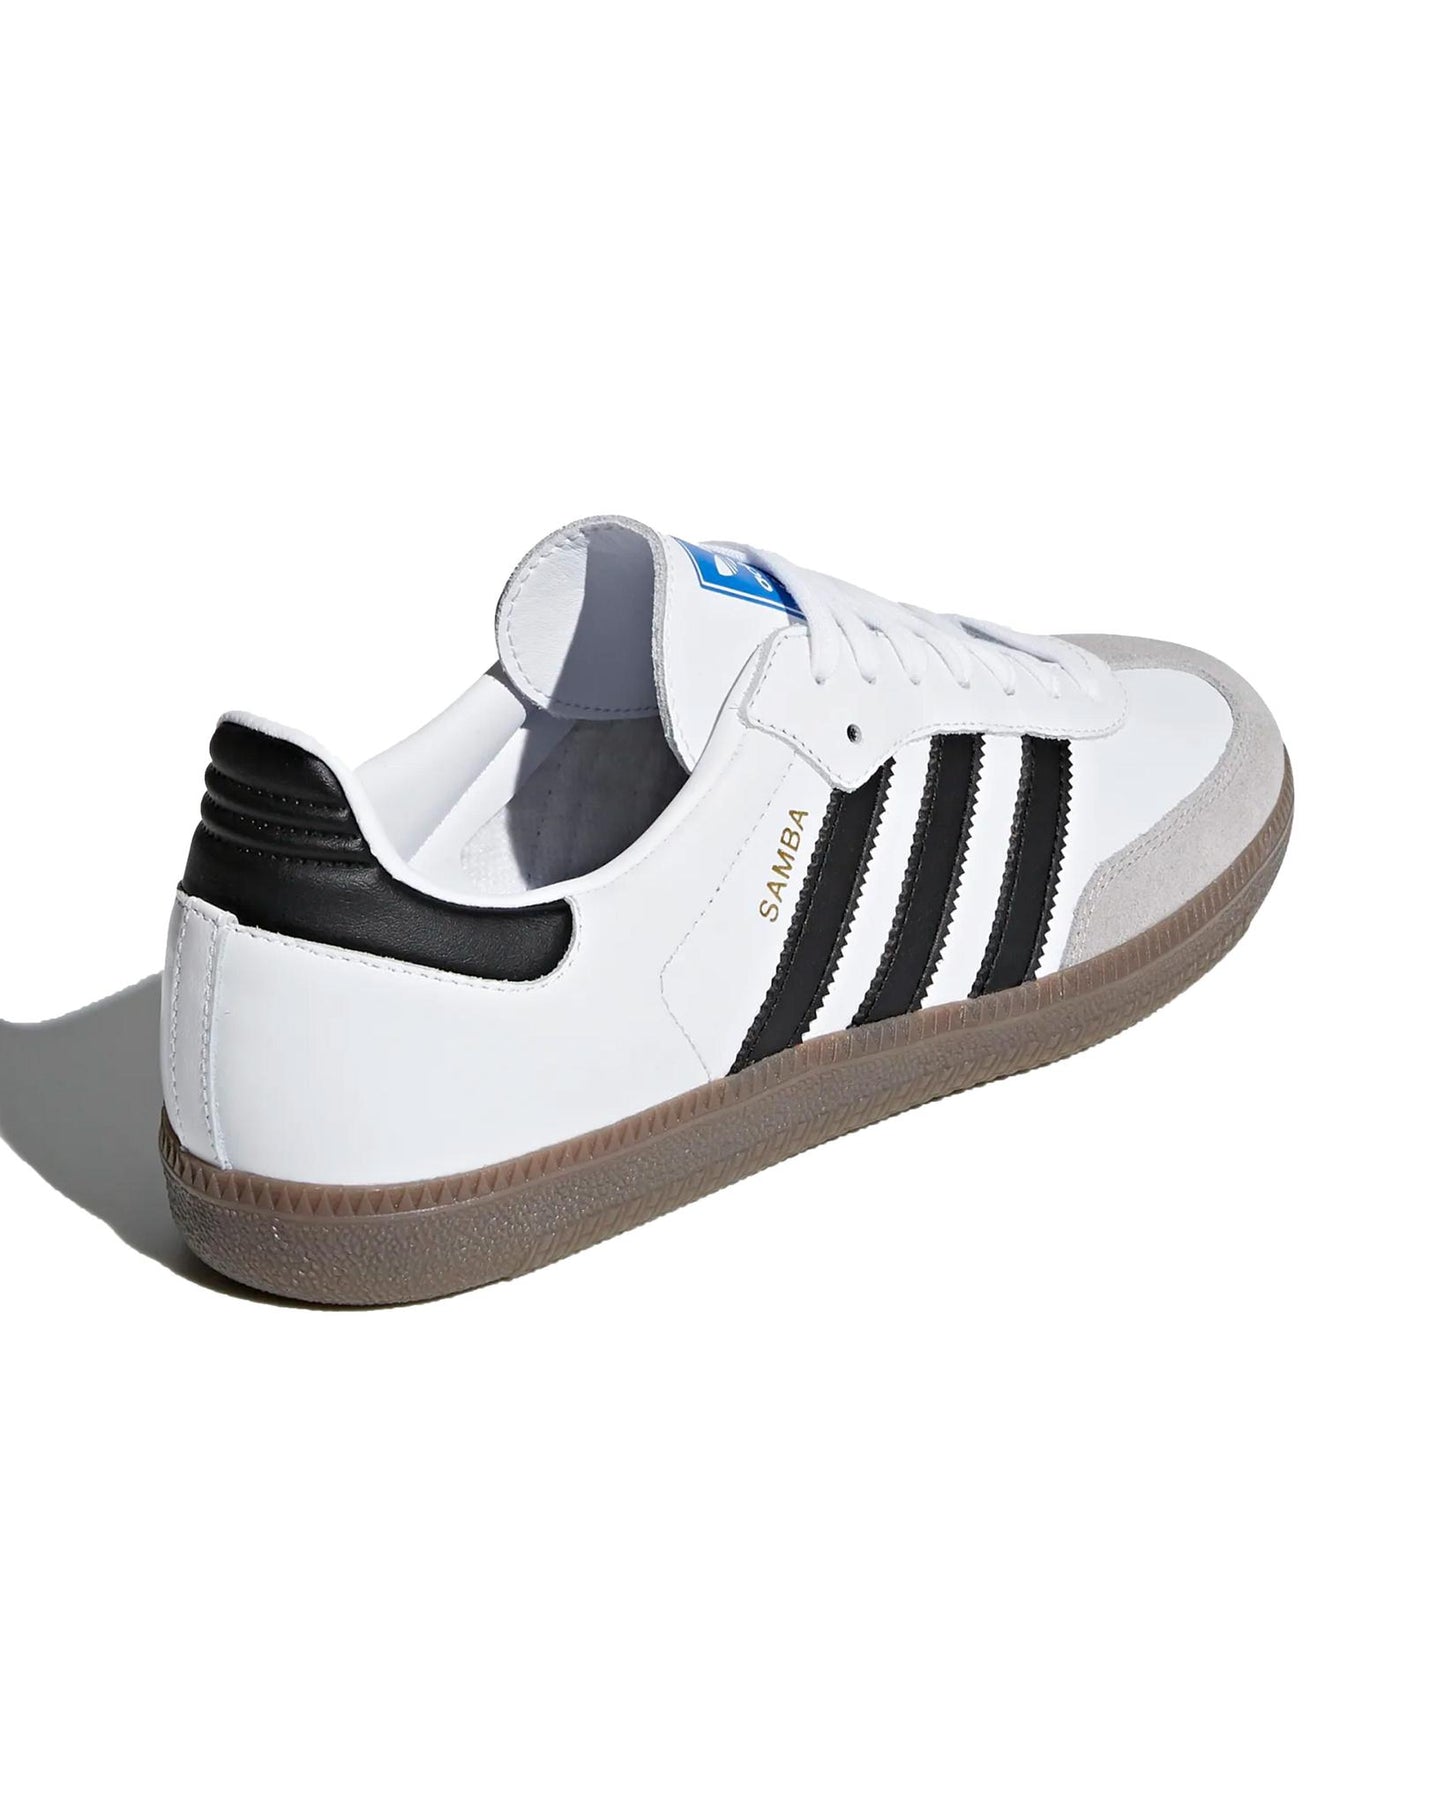 Adidas Samba Classic Black/White 9